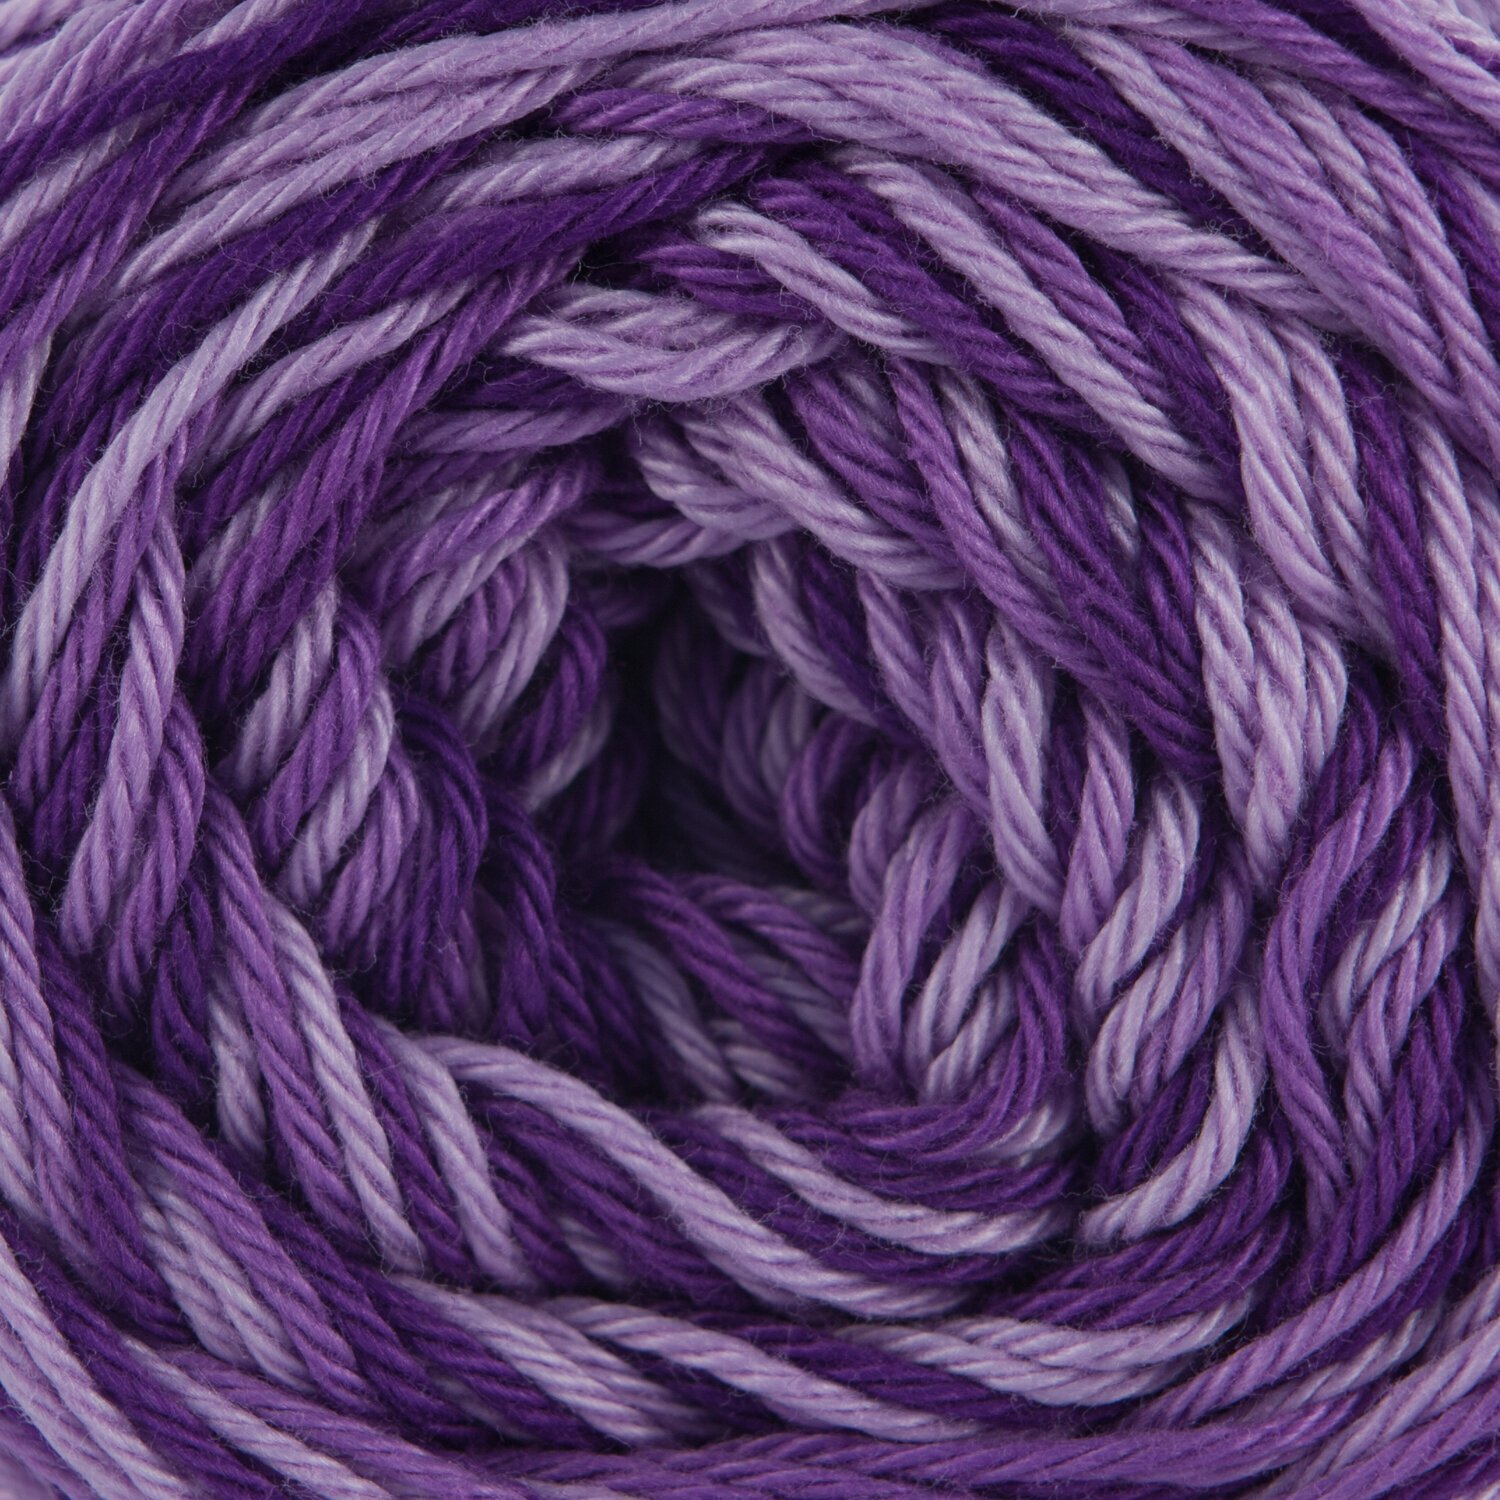 Fire de tricotat Nitarna Ceska Trebova Katka Ombre 43272 Violet